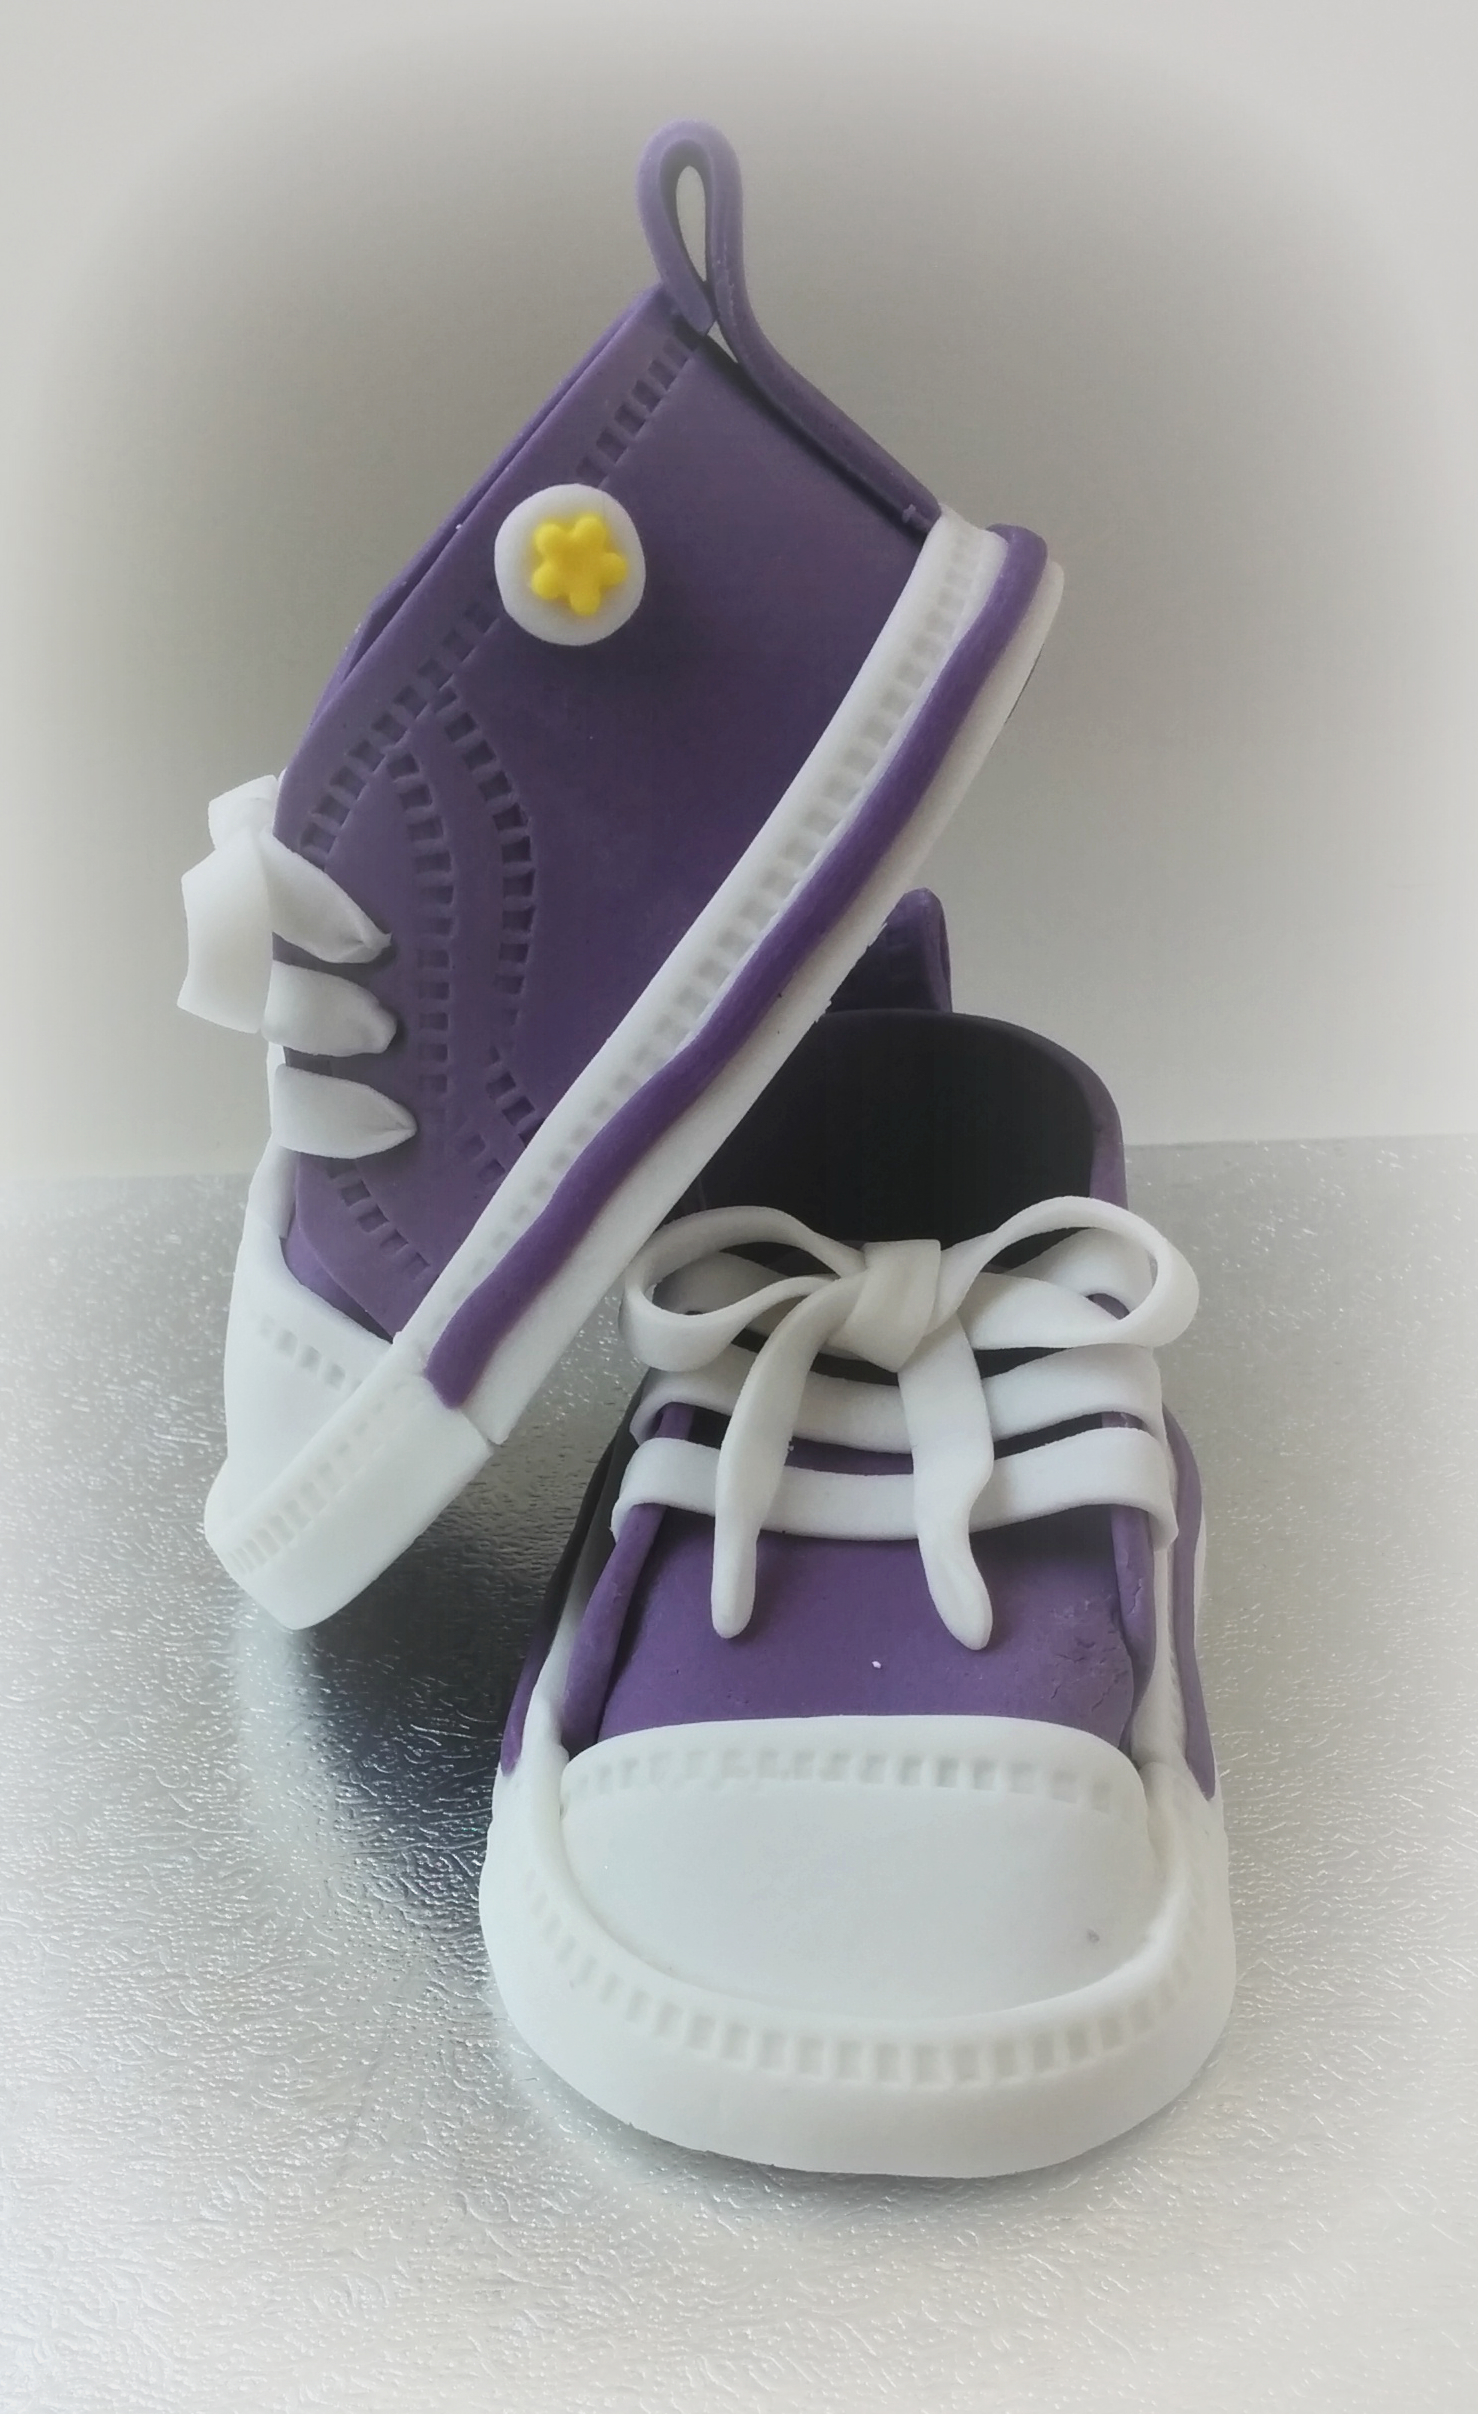 purple baby converse